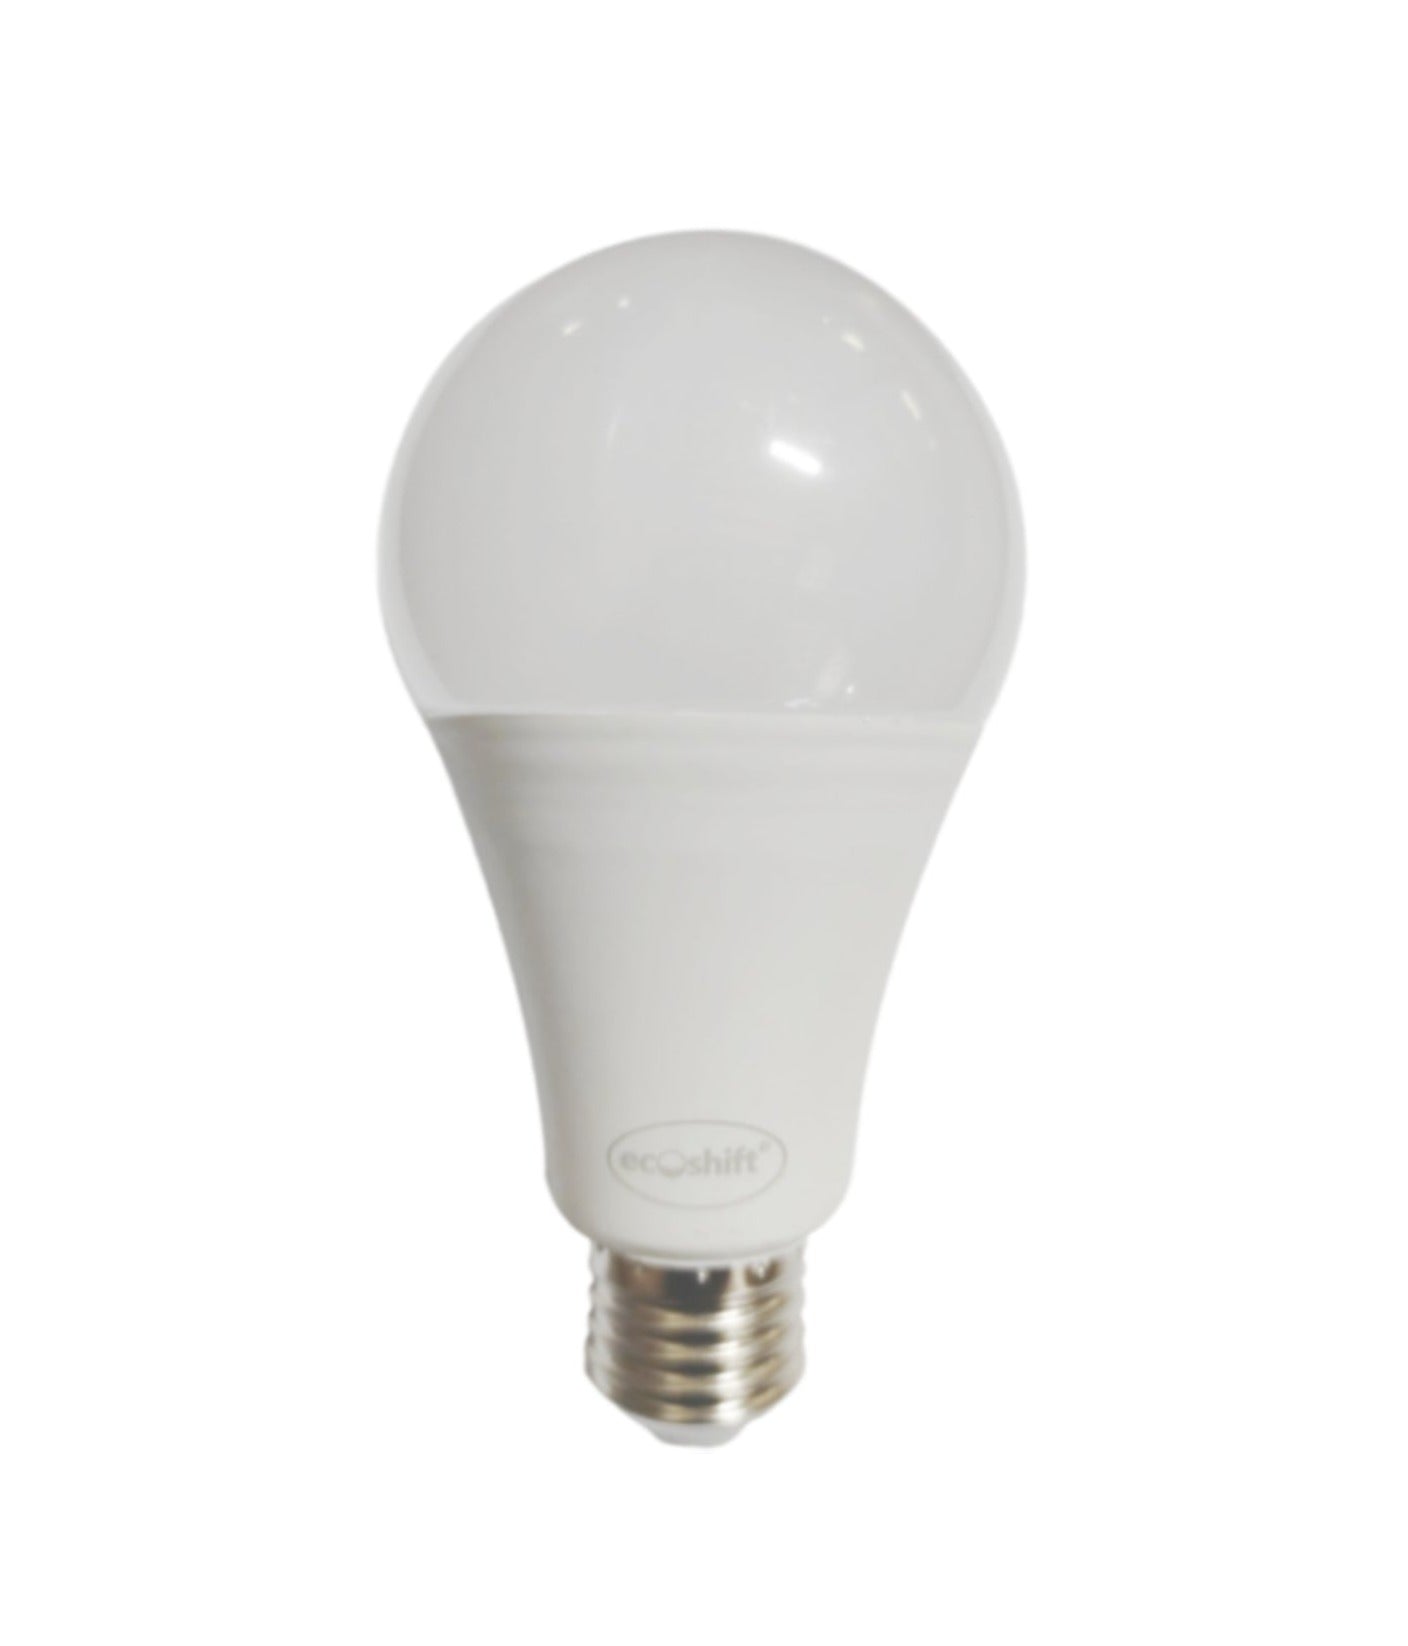 LED Bulb 12W E27 Bulb Holder Ecoshift Shopify